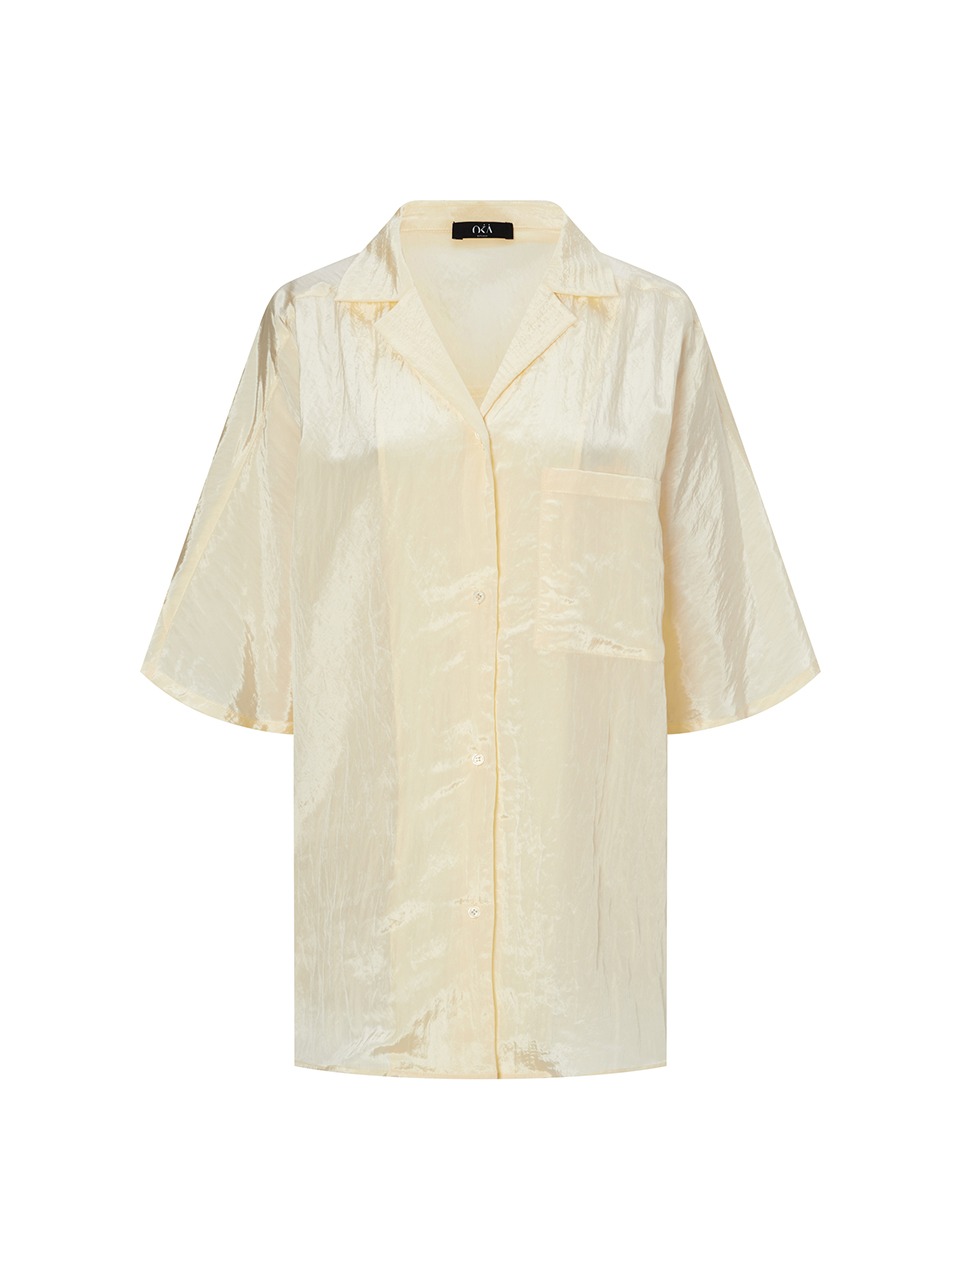 Sekina  Overfit Half Shirts Cream